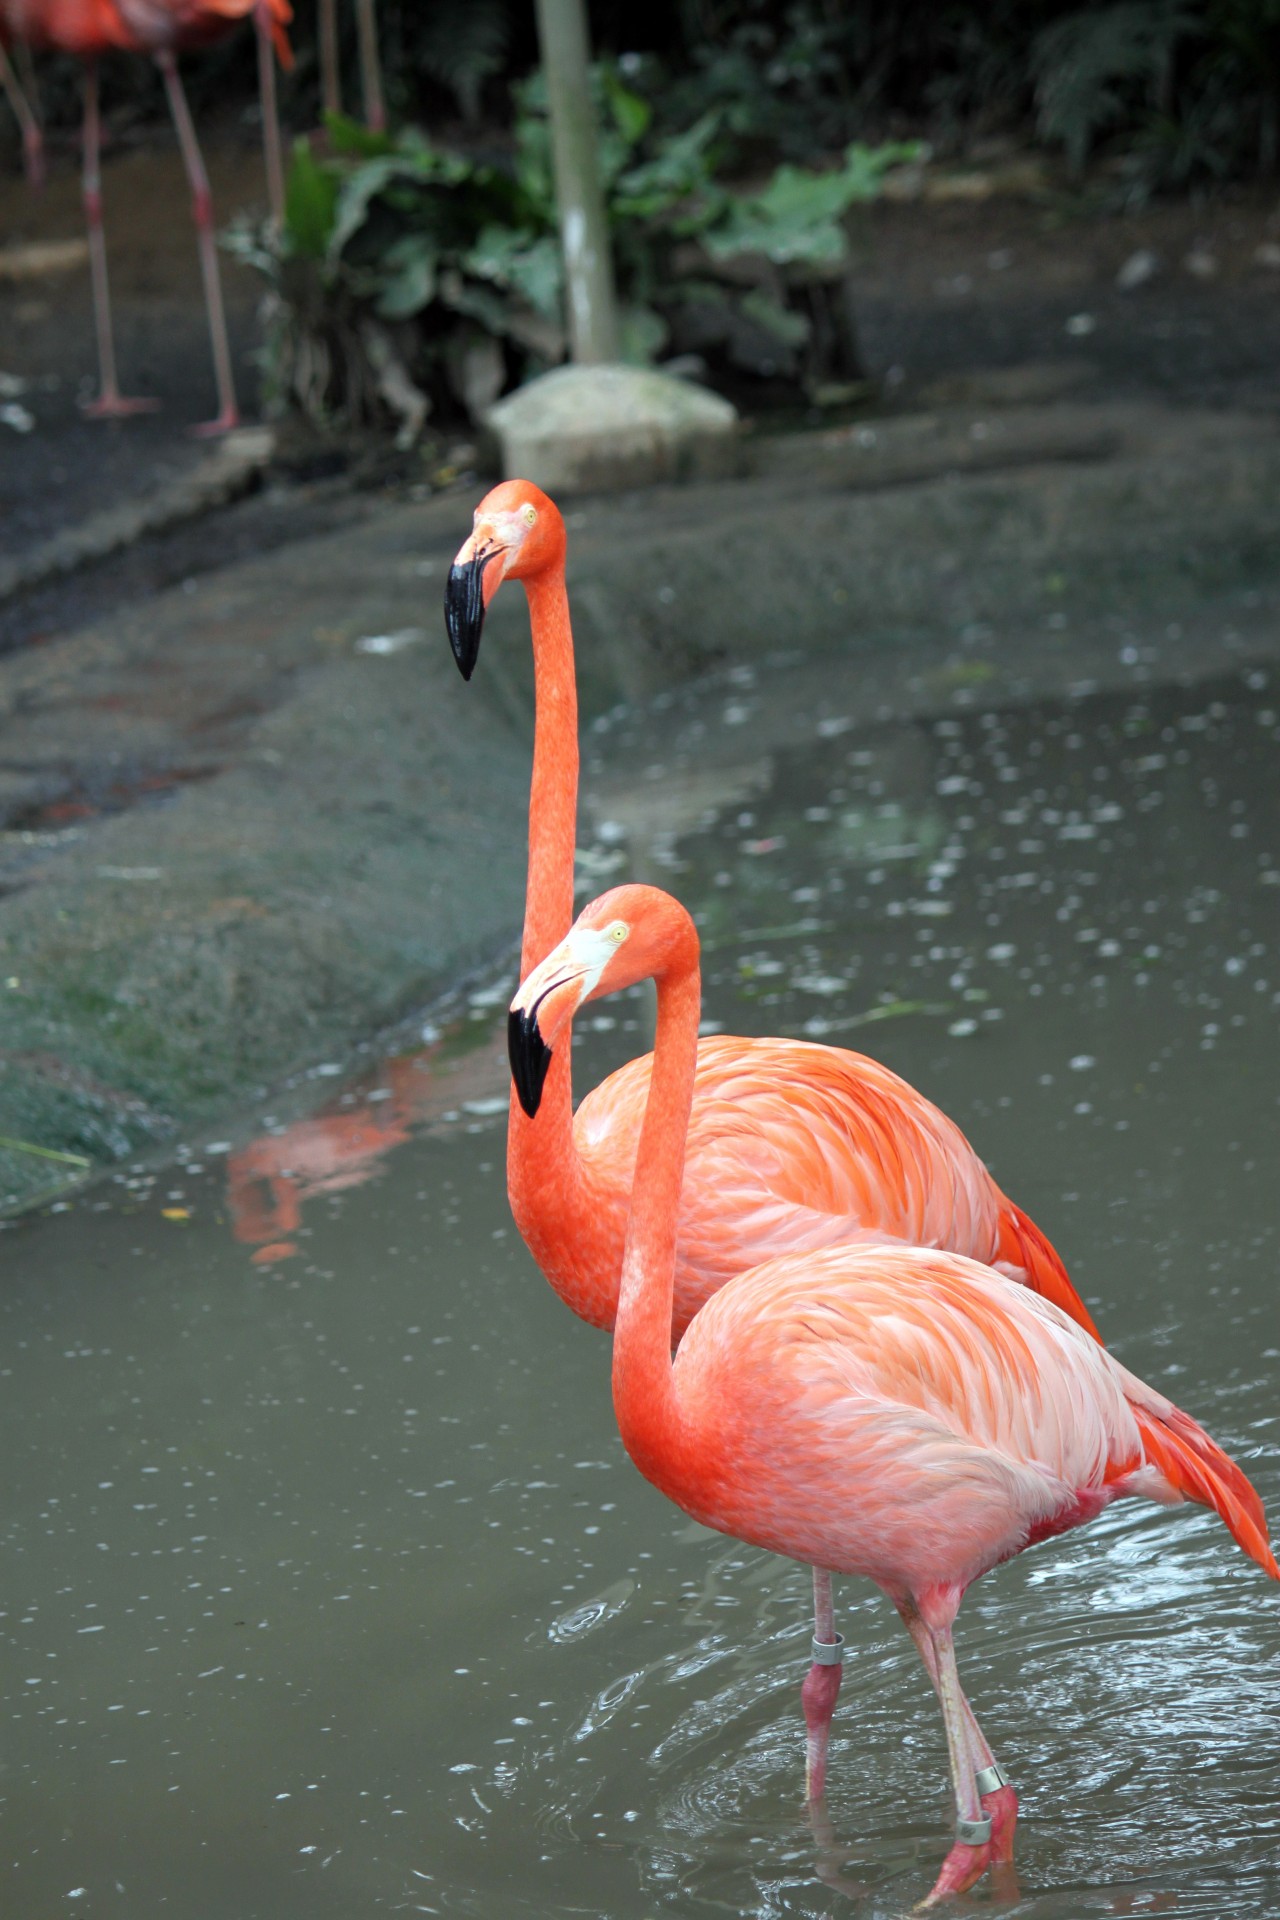 Du Flamingo & Nbsp,  Pėsčiomis & Nbsp,  Kartu,  Singapūras & Nbsp,  Jurong & Nbsp,  Paukštis & Nbsp,  Parkas,  Du Flamingas Eina Kartu, Nemokamos Nuotraukos,  Nemokama Licenzija